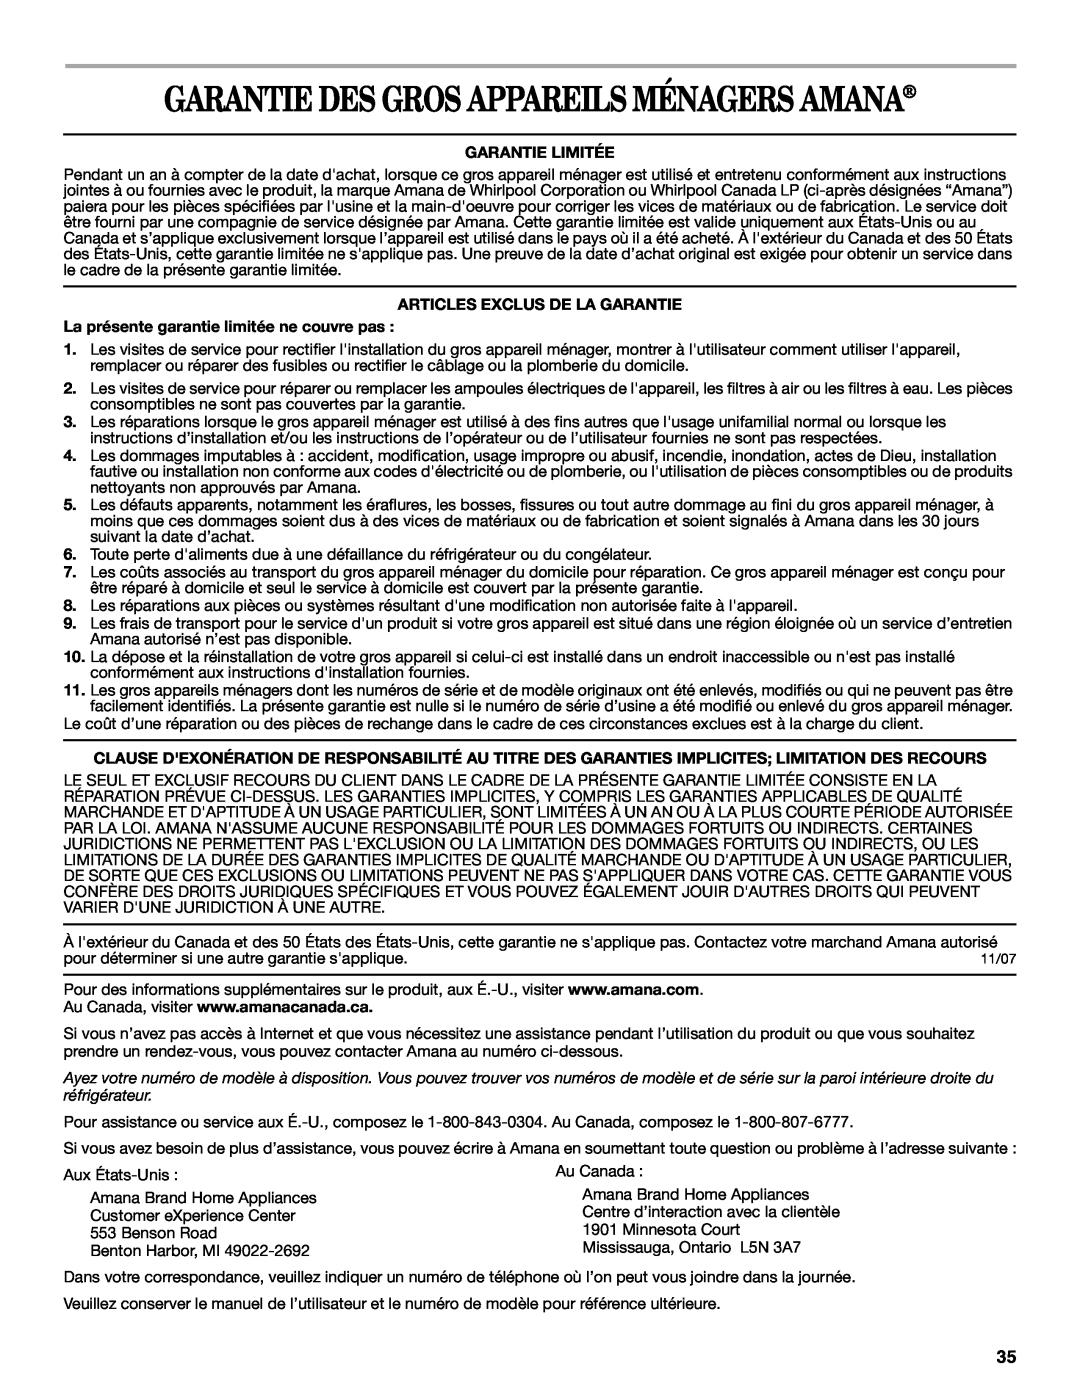 Amana ATB1932MRW Garantie Des Gros Appareils Ménagers Amana, Garantie Limitée, Articles Exclus De La Garantie 